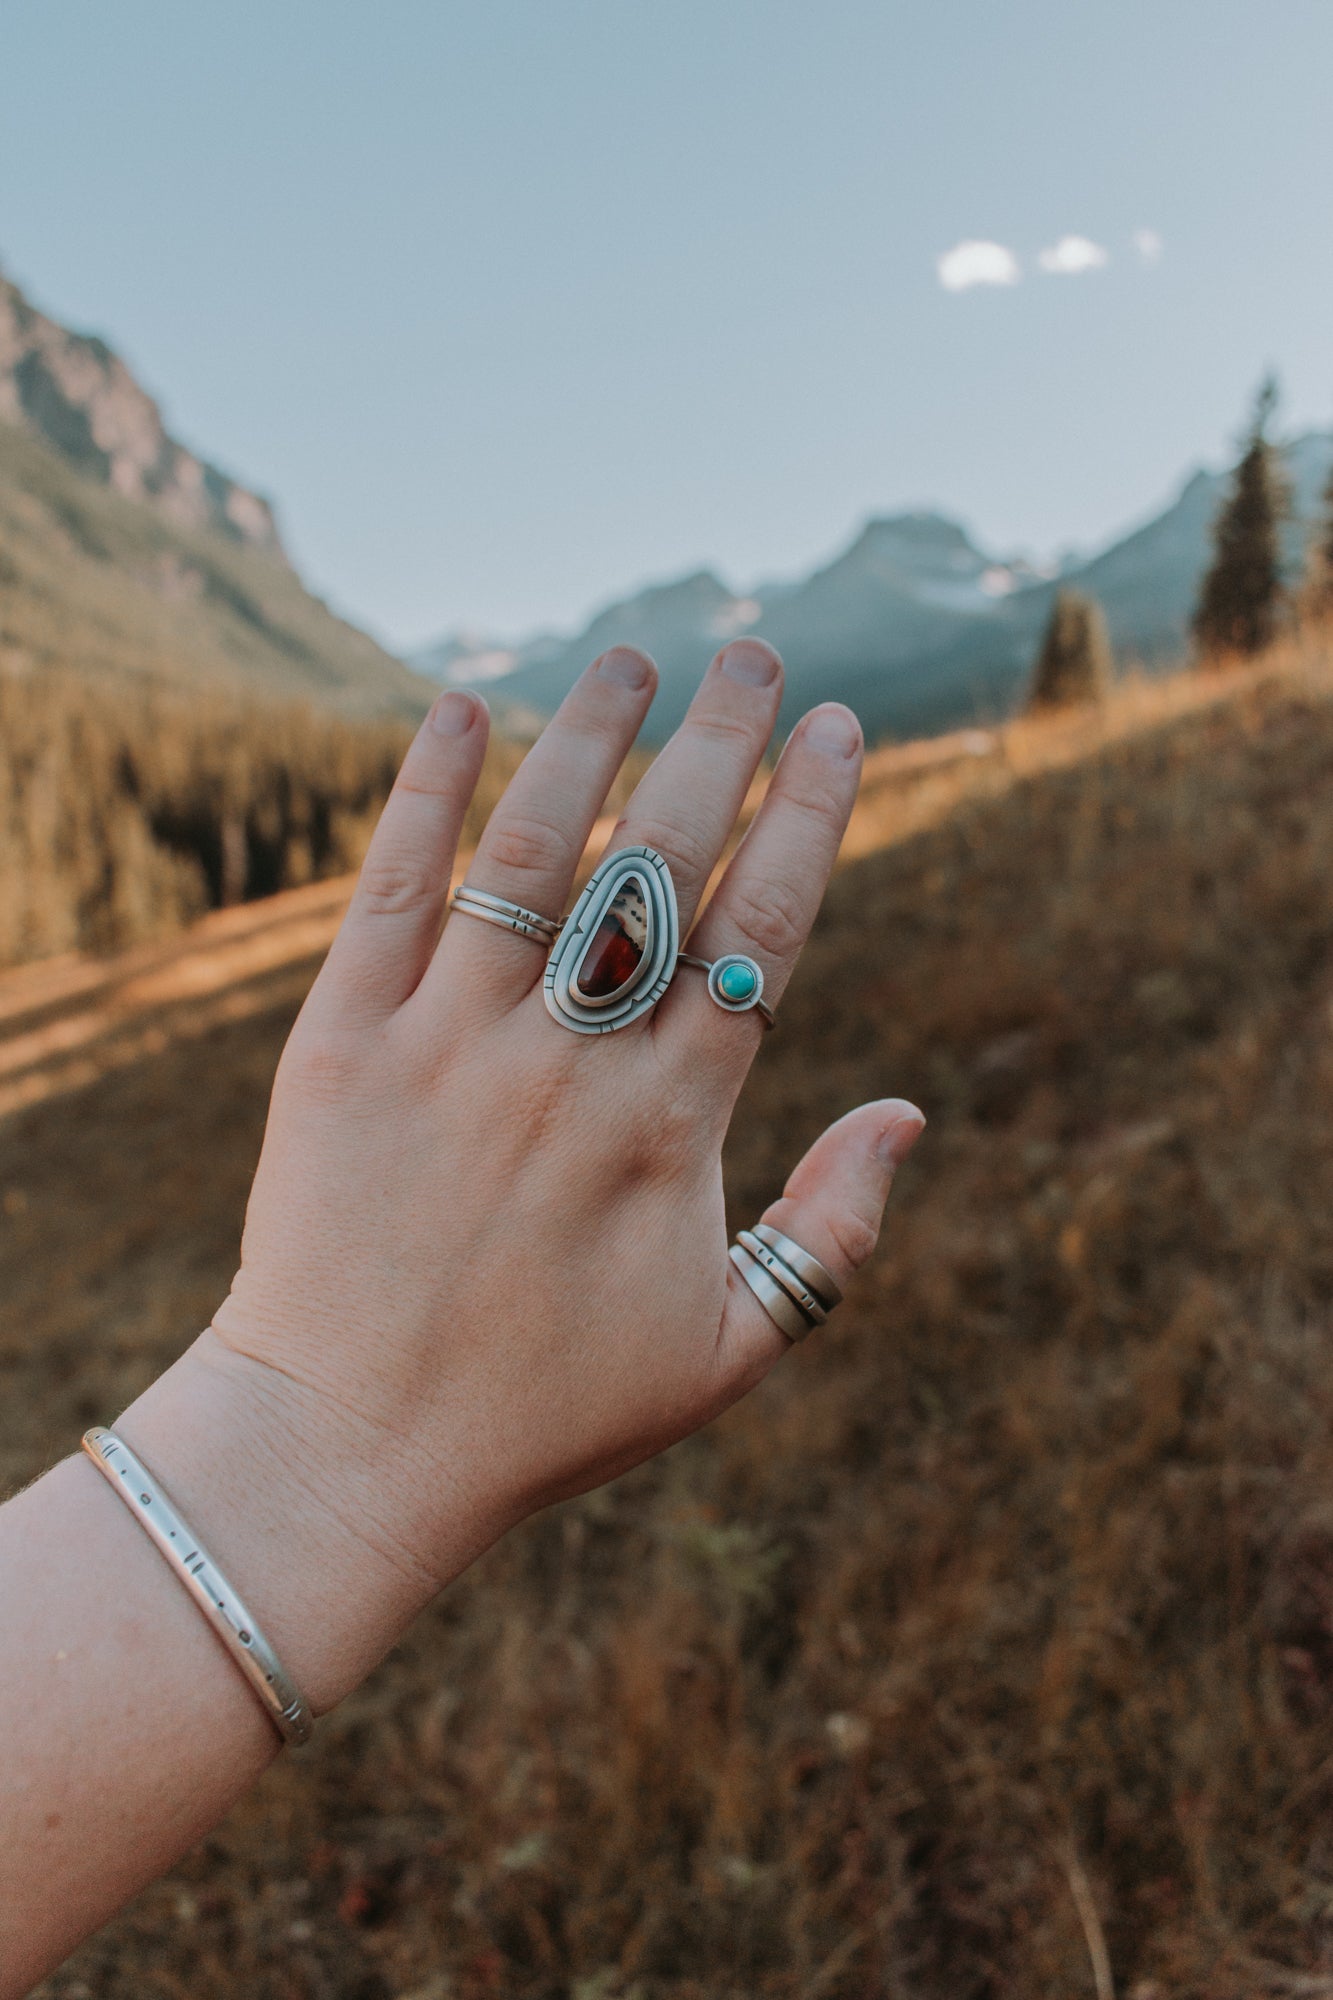 Sunset Mountain Montana Agate Statement Ring - Size 9.5 - Third Hand Silversmith LLC handmade jewelry, Bozeman, Montana